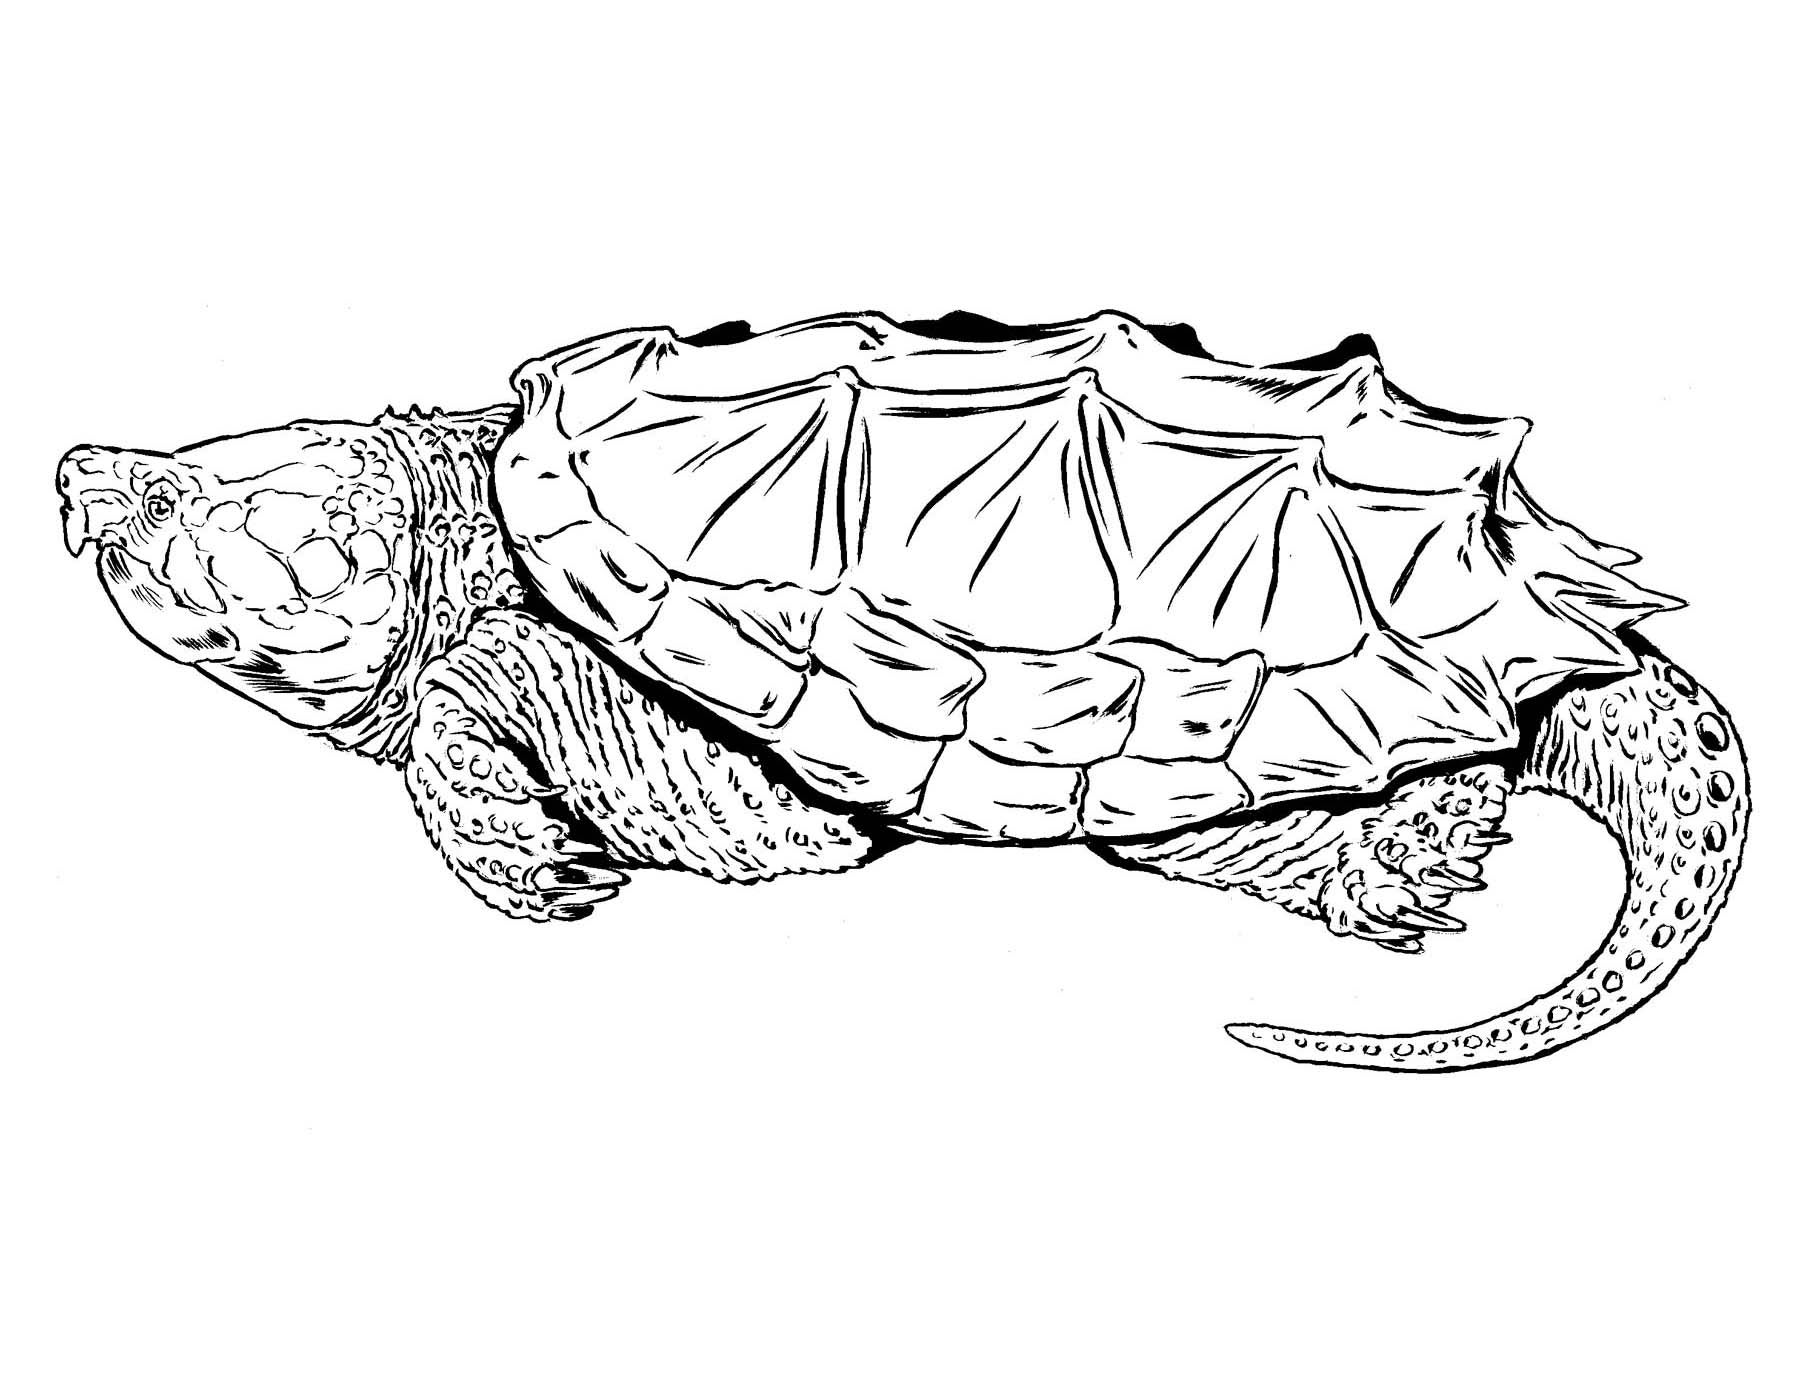 Illustration of alligator snapping turtle